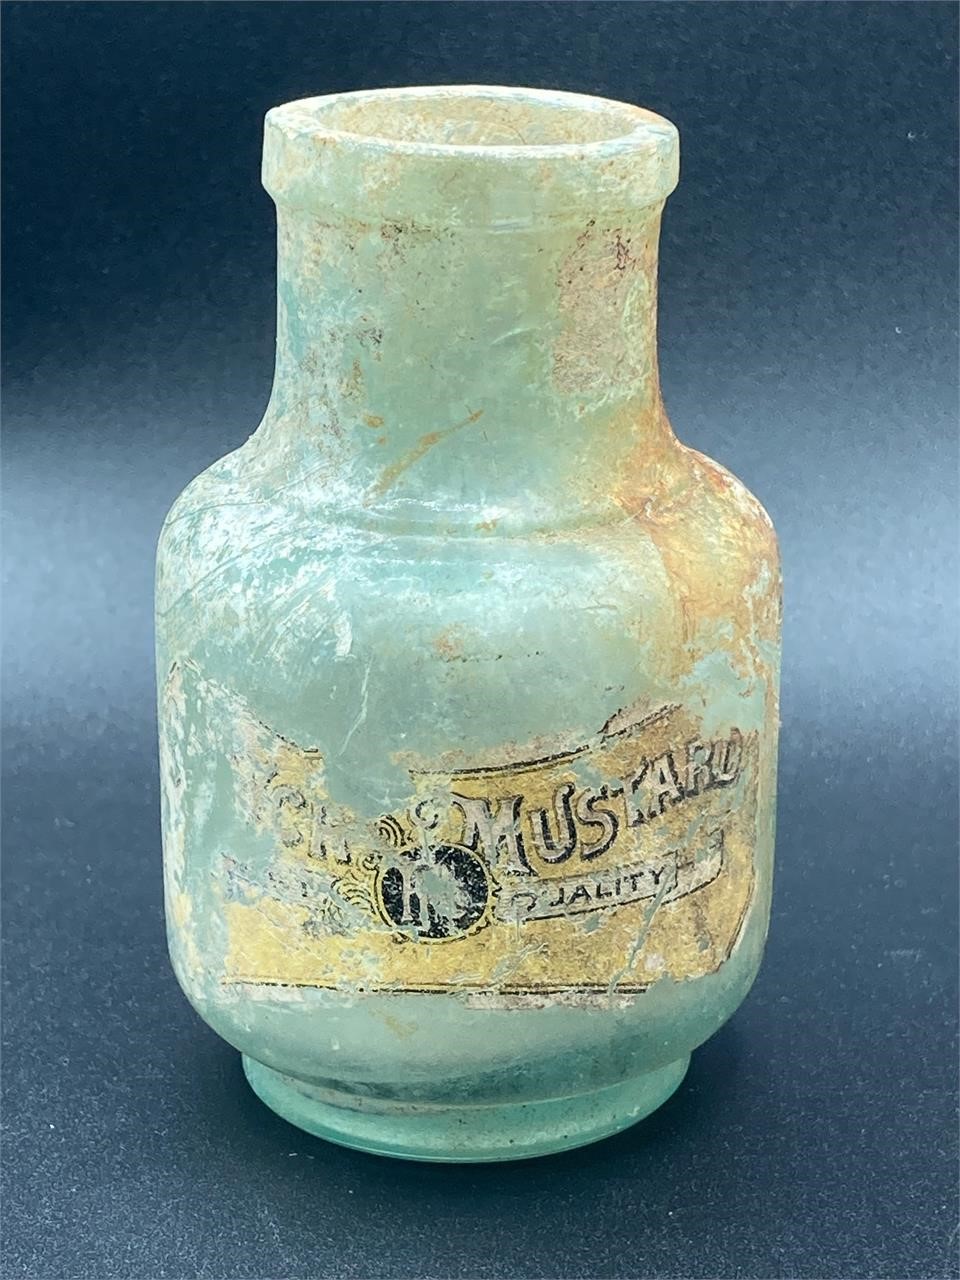 Vintage Potter-Parlin Glass French’s Mustard Jar